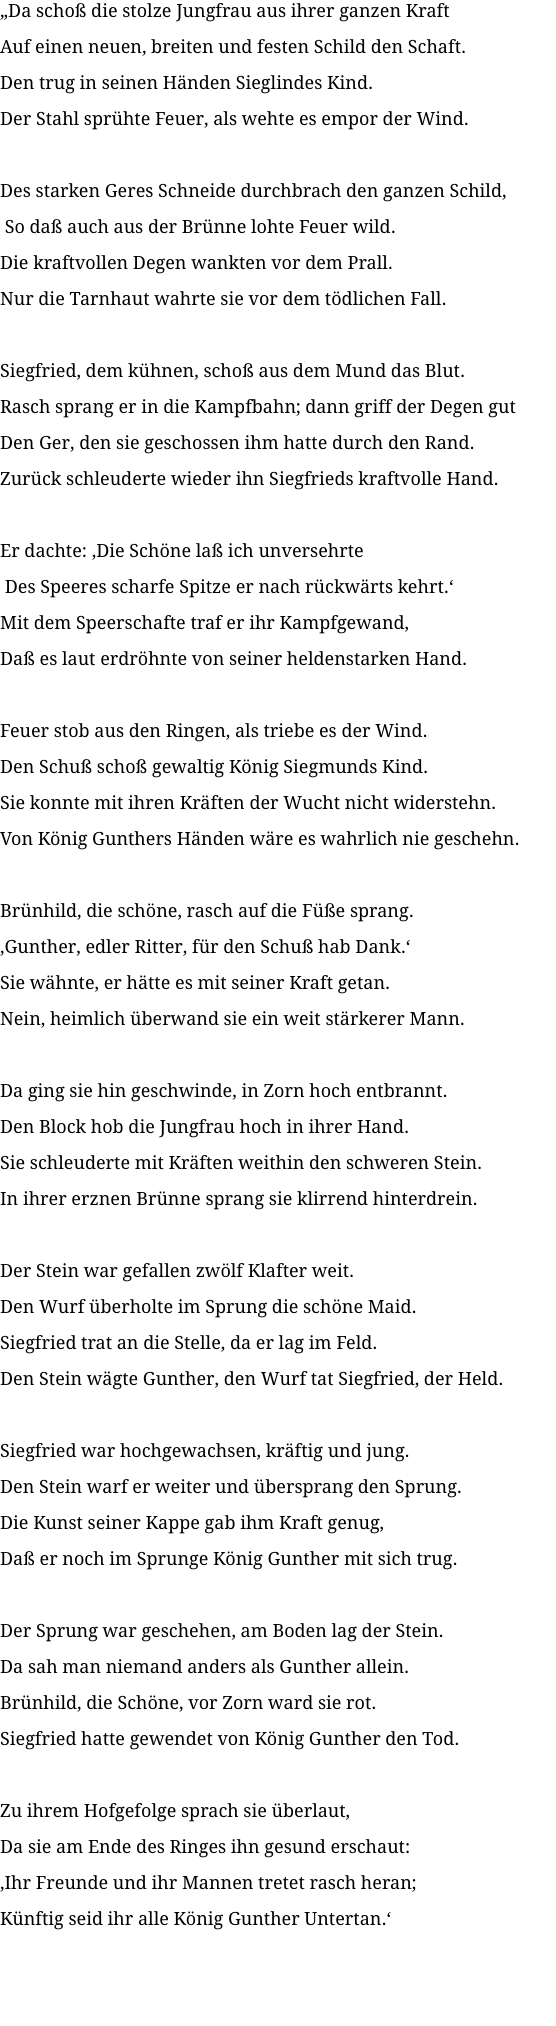 gedicht nibelungenlied als grafik